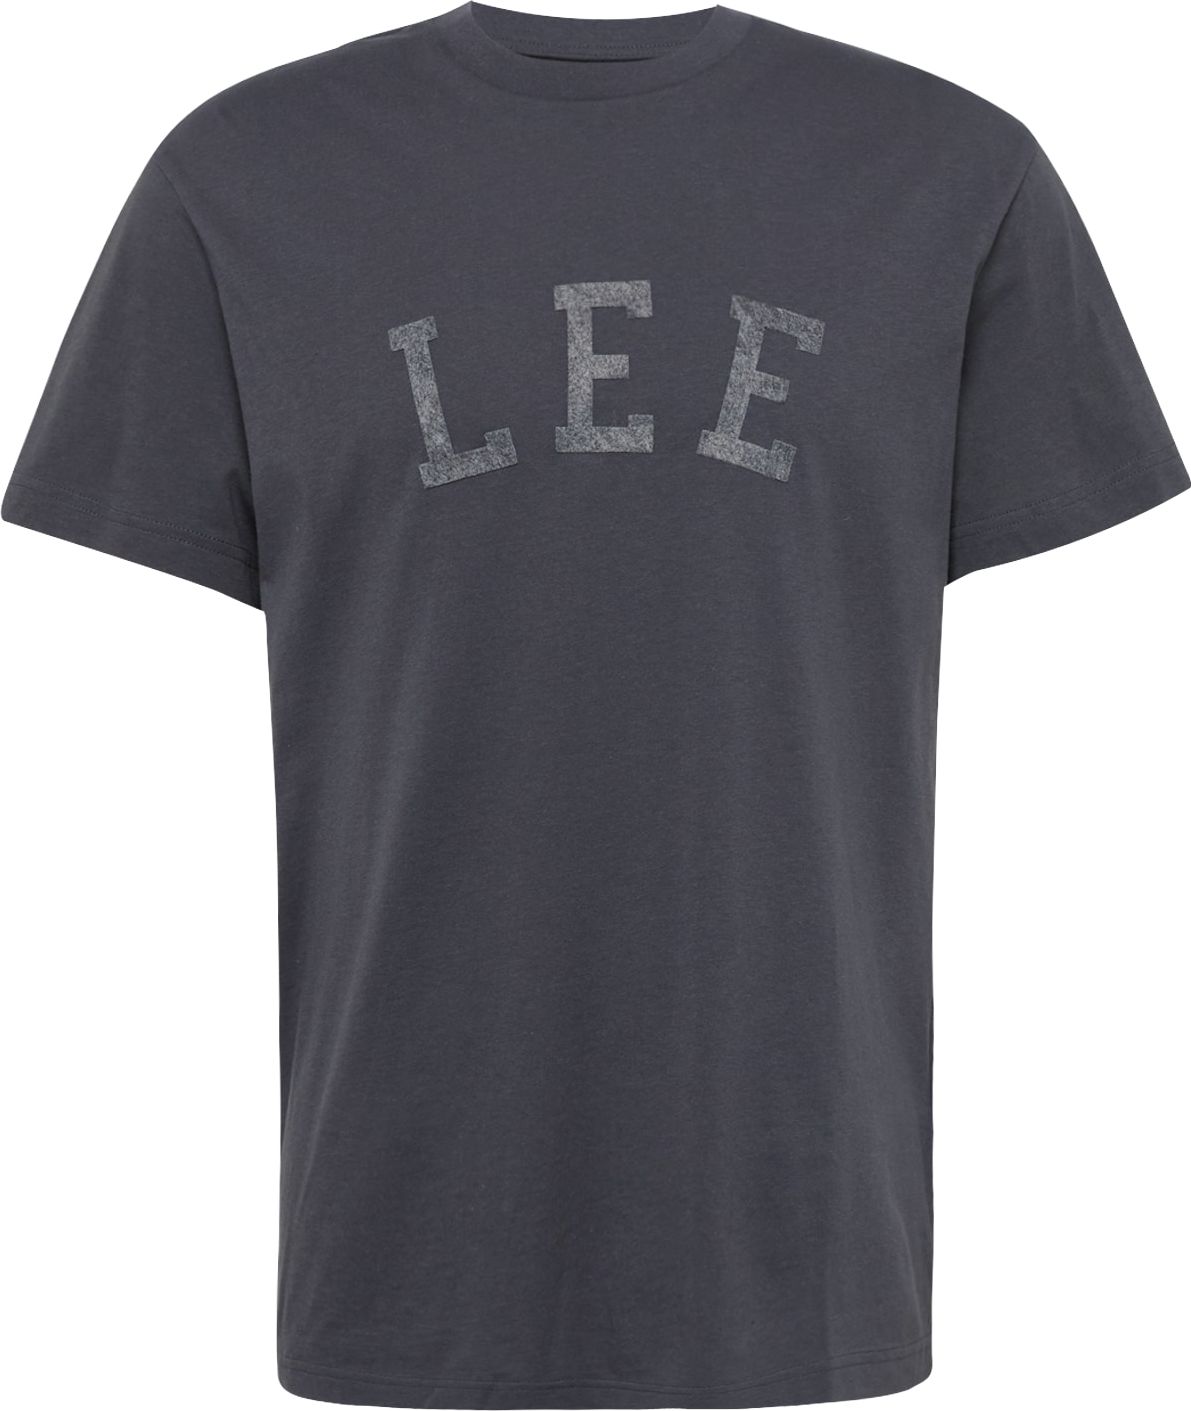 Tričko Lee antracitová / šedý melír